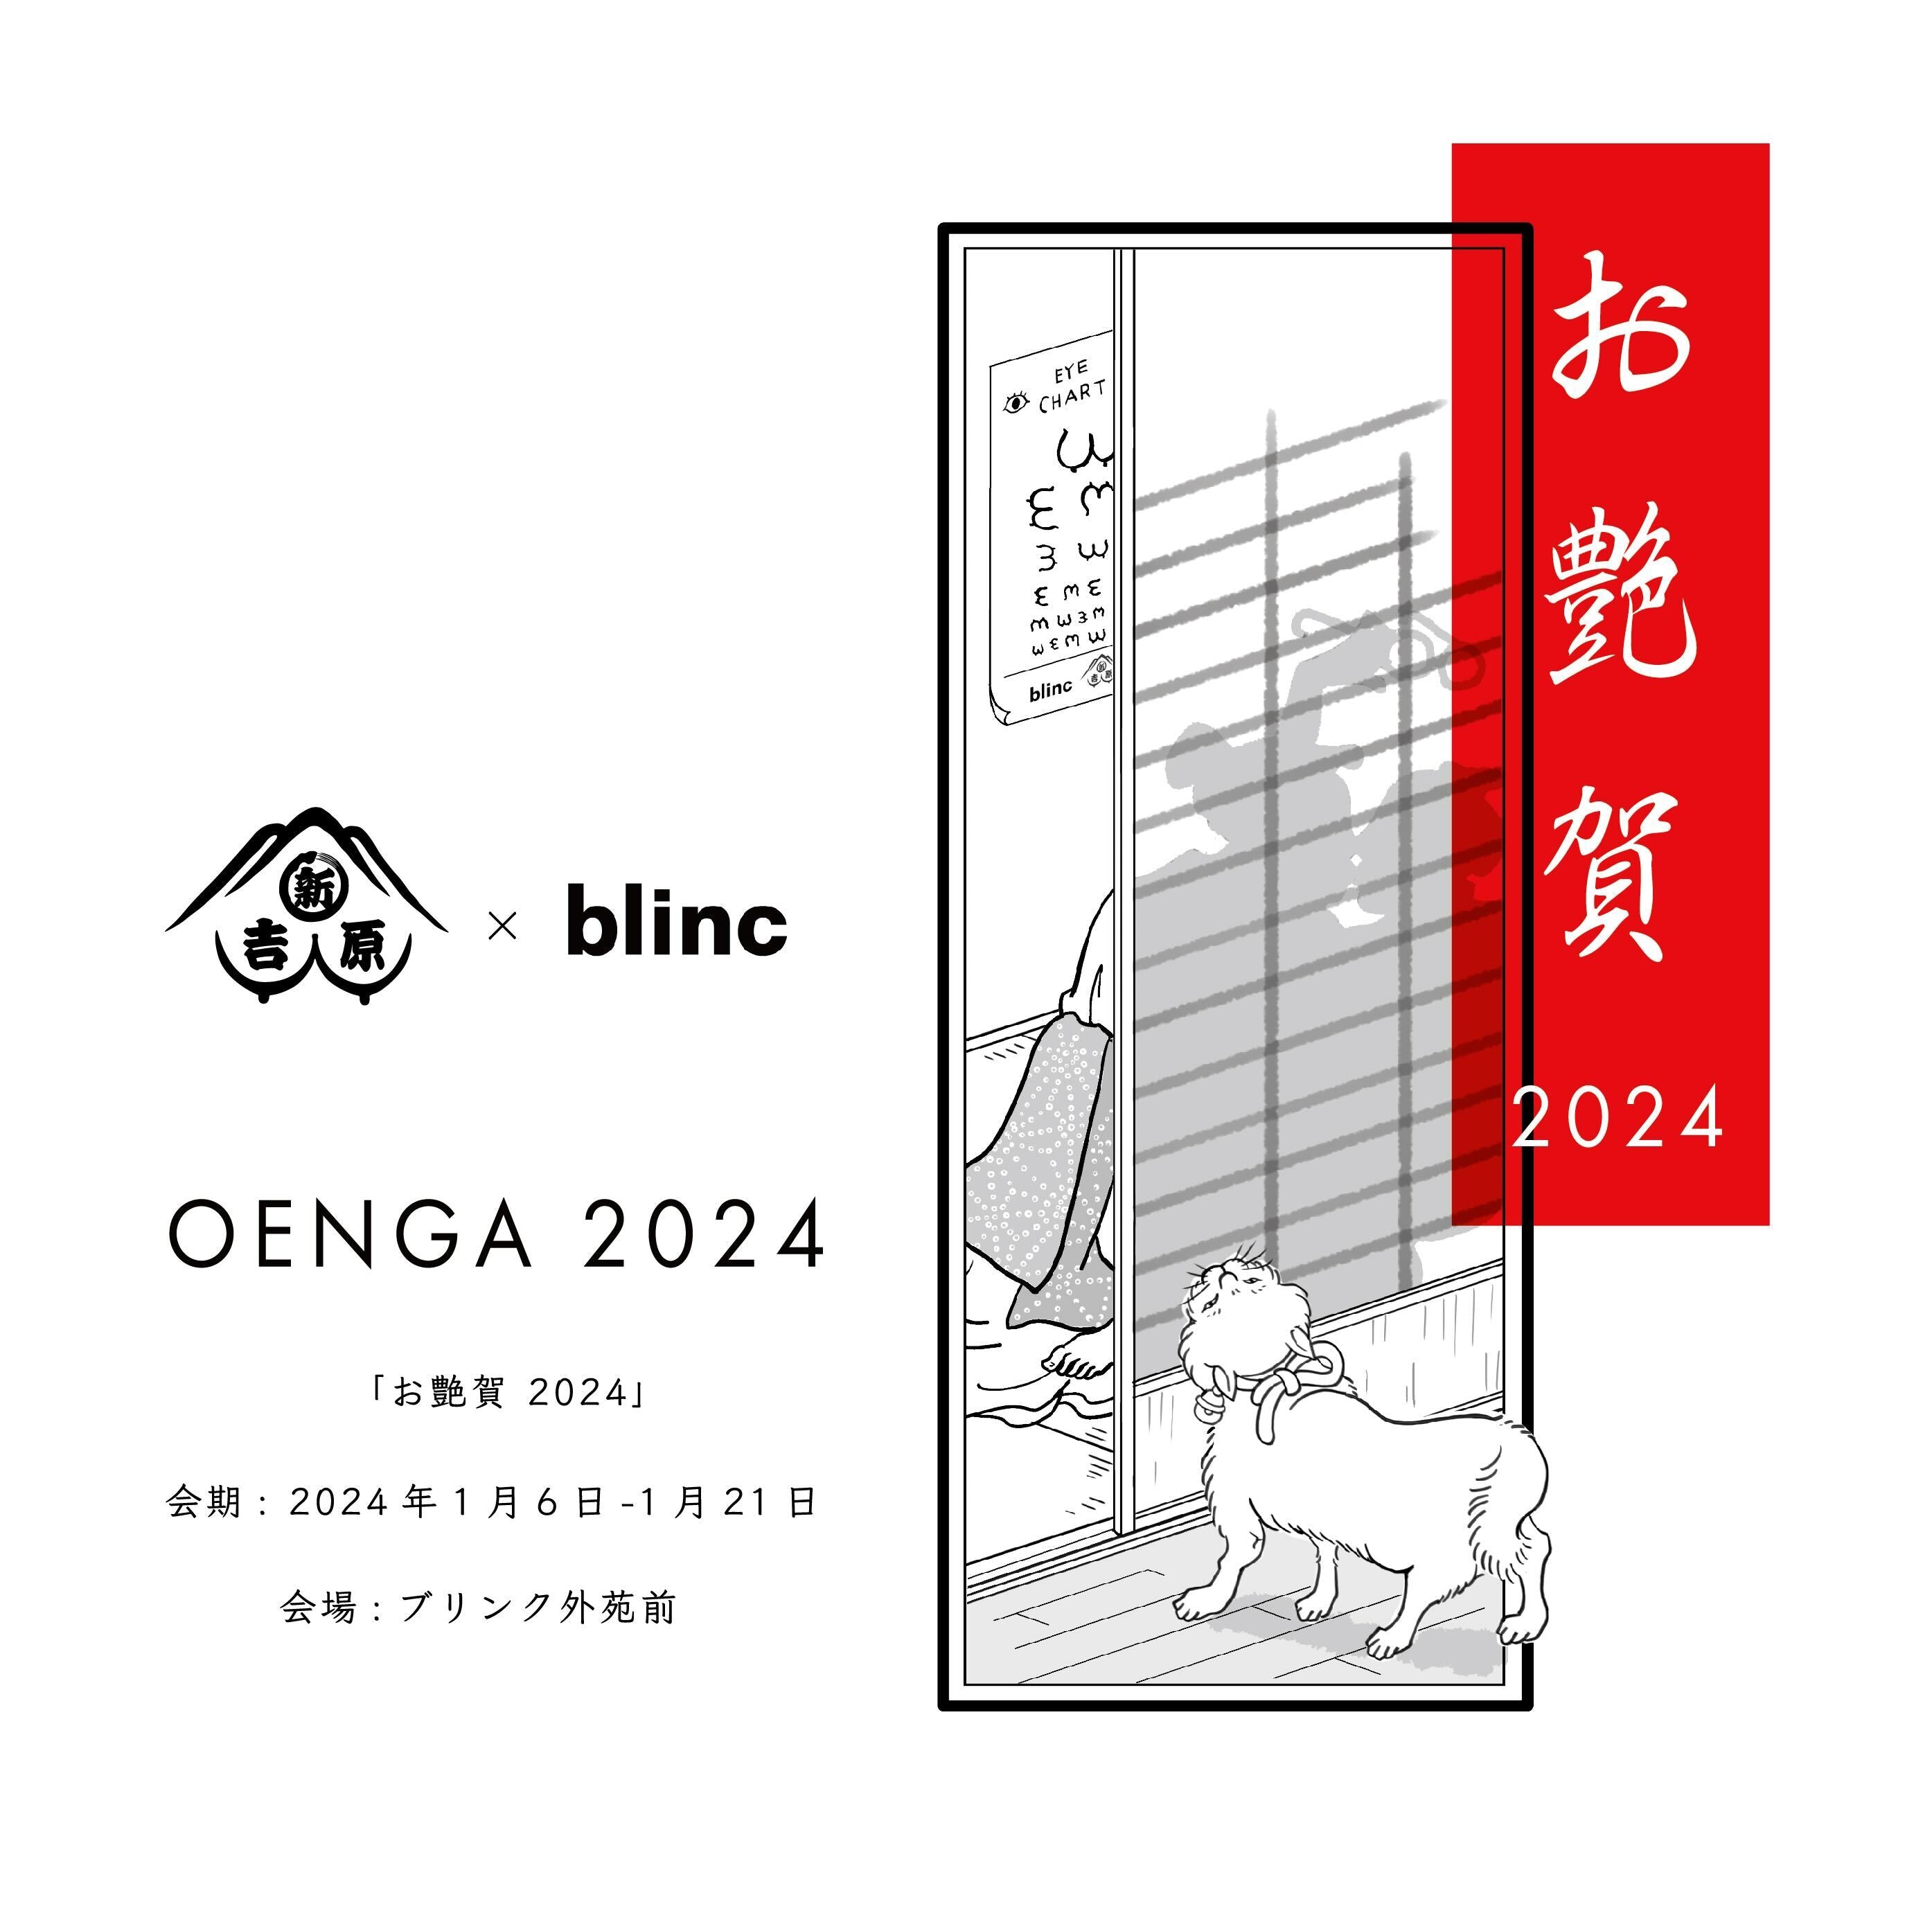 blinc official – blinc web store